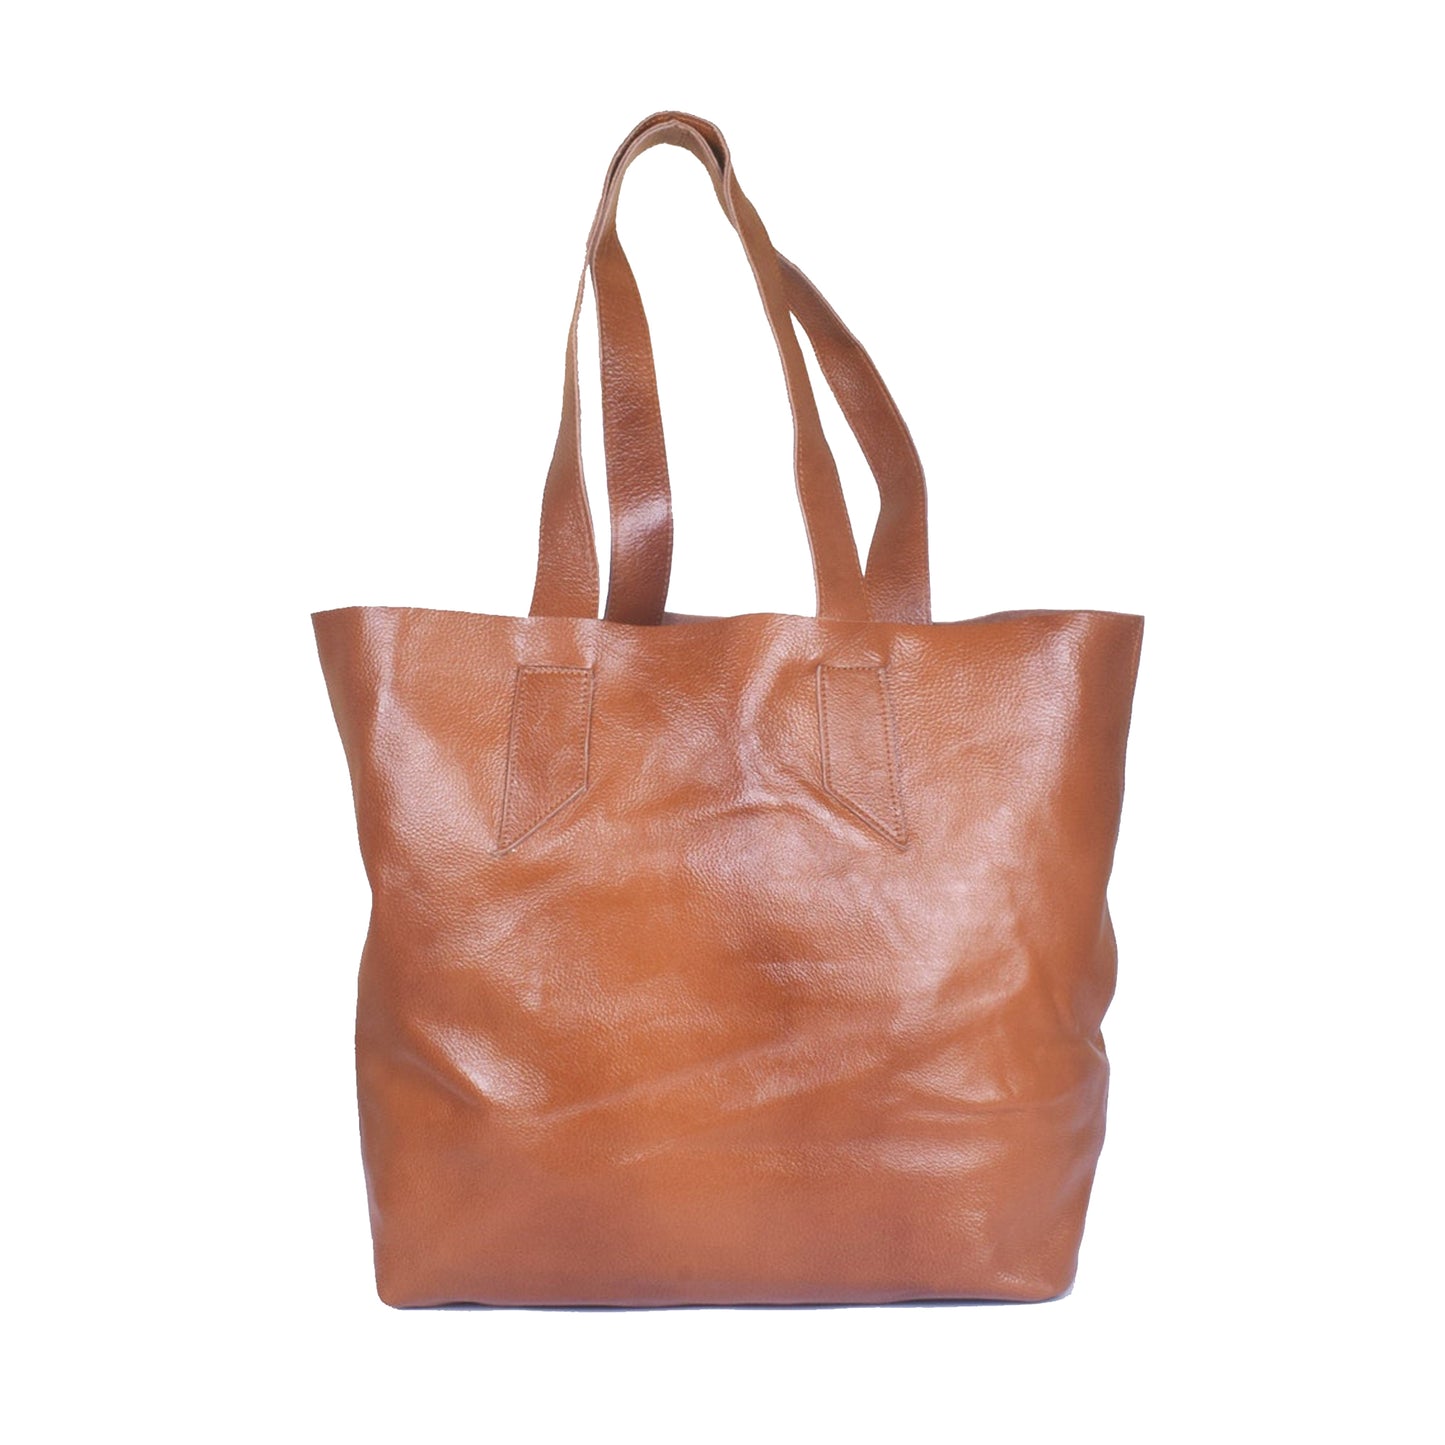 Black Genuine Leather Tote Bag for Women Shopper Purse Leather Shoulder Bag Large Marketing Bag Everyday Tote Bag Mothers Day Gift for Her